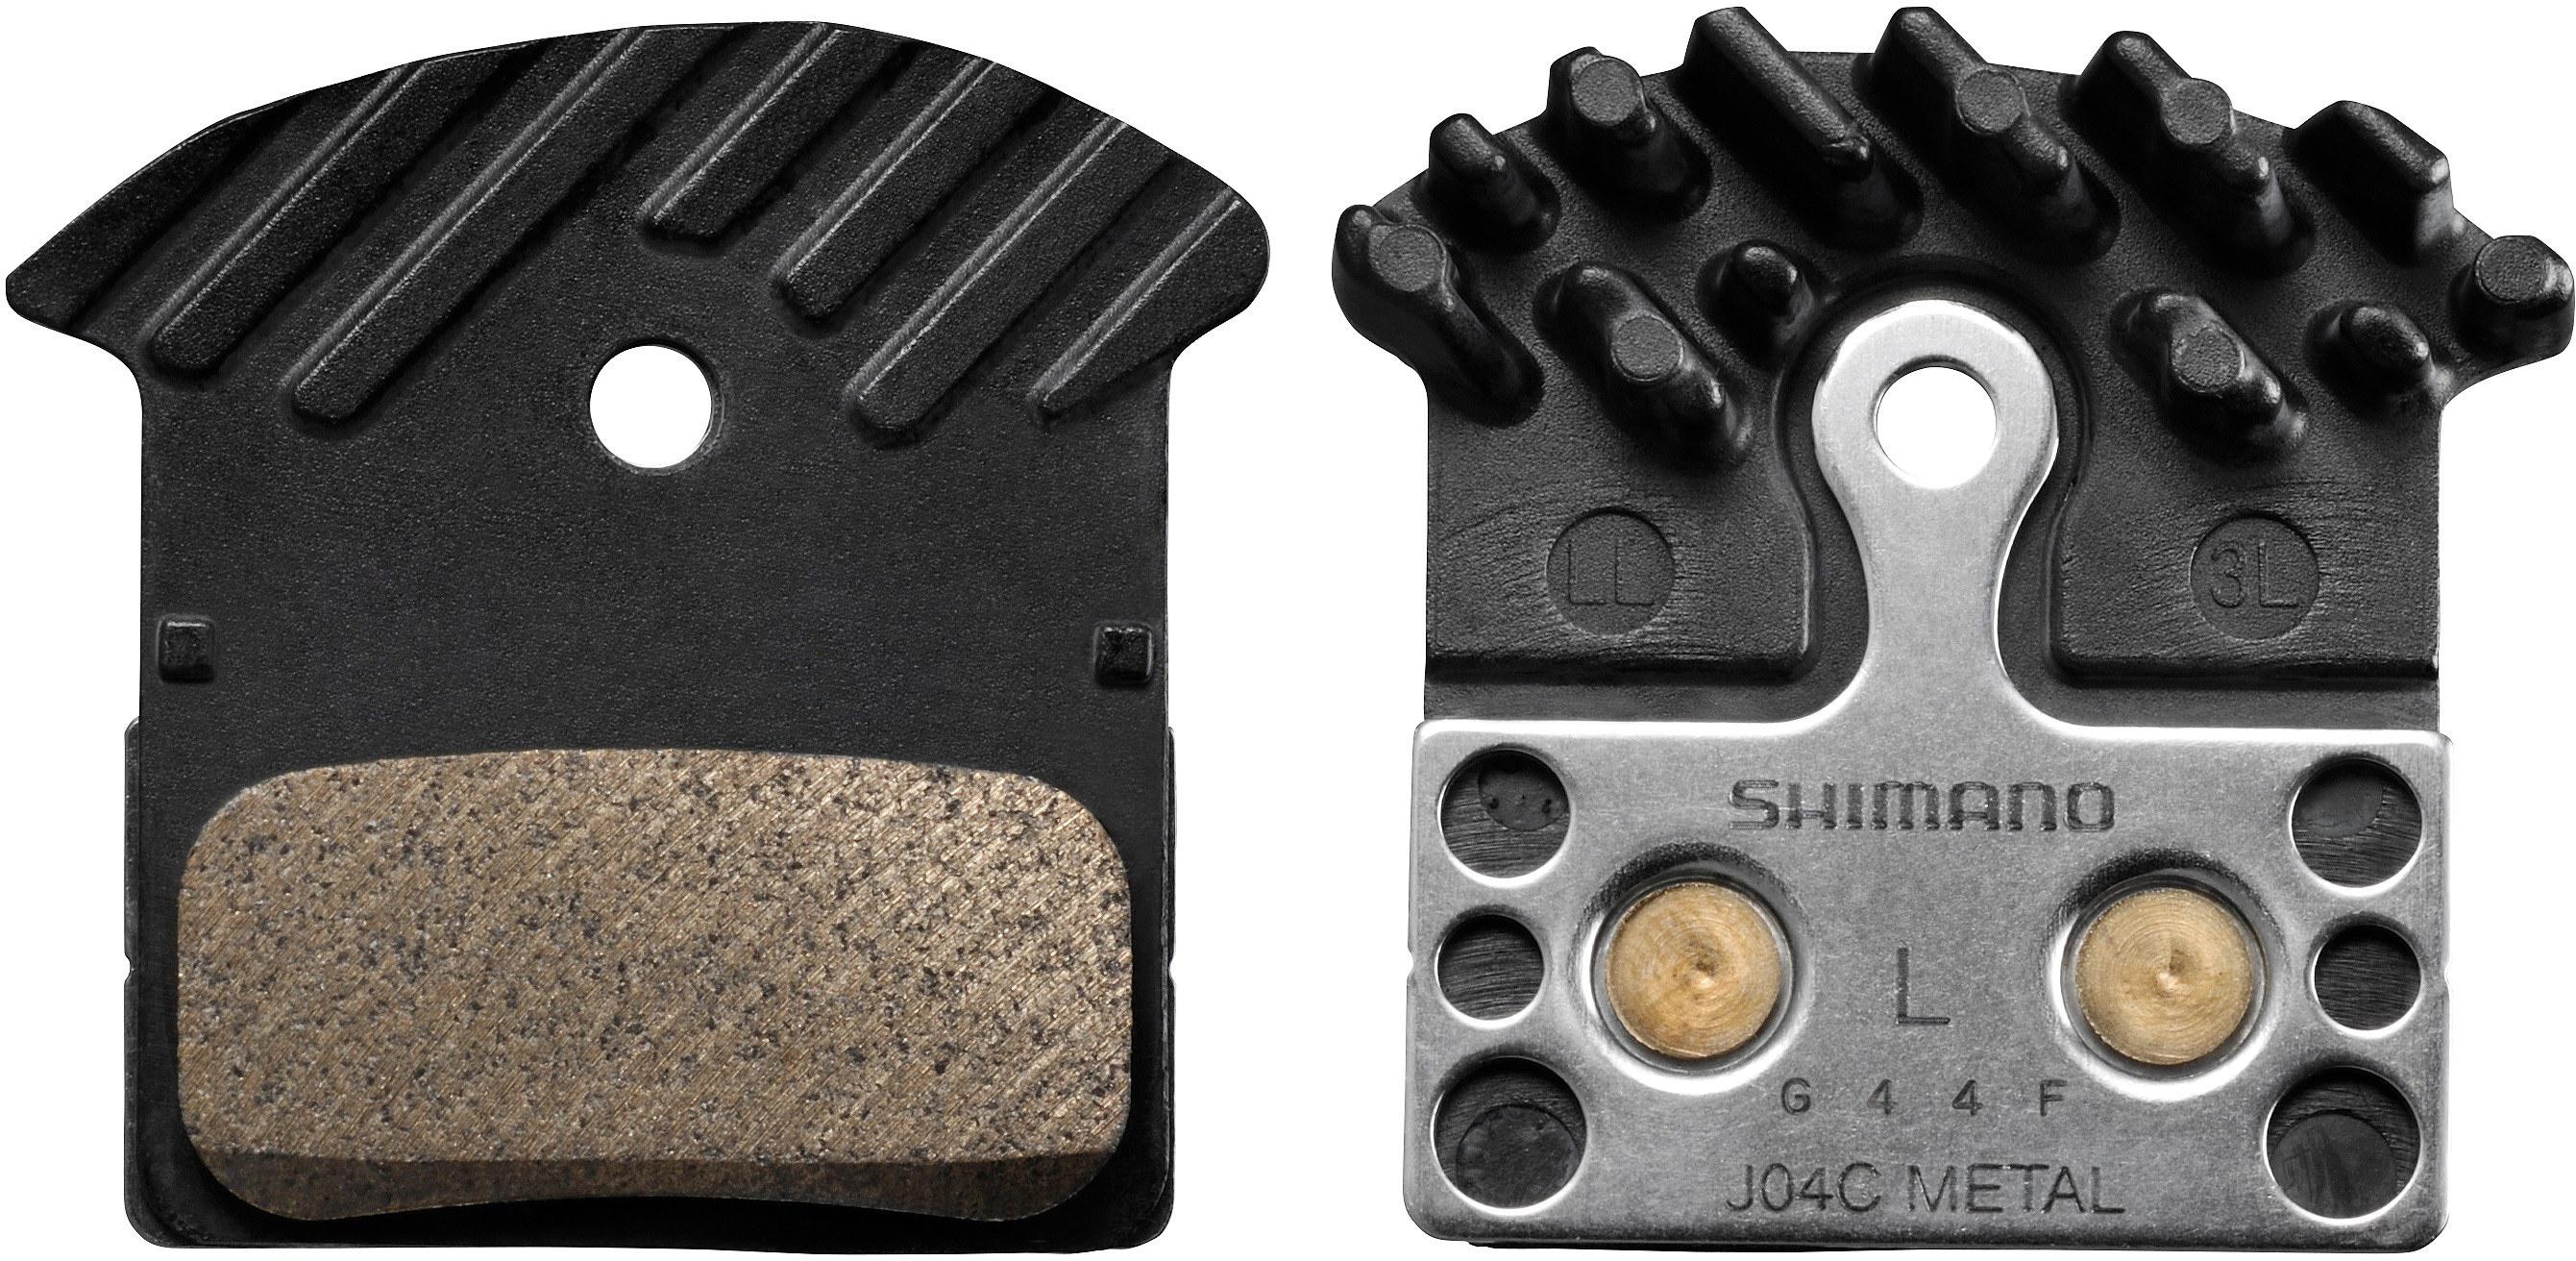 Shimano J04c Metal Disc Brake Pad With Fins  Black/silver